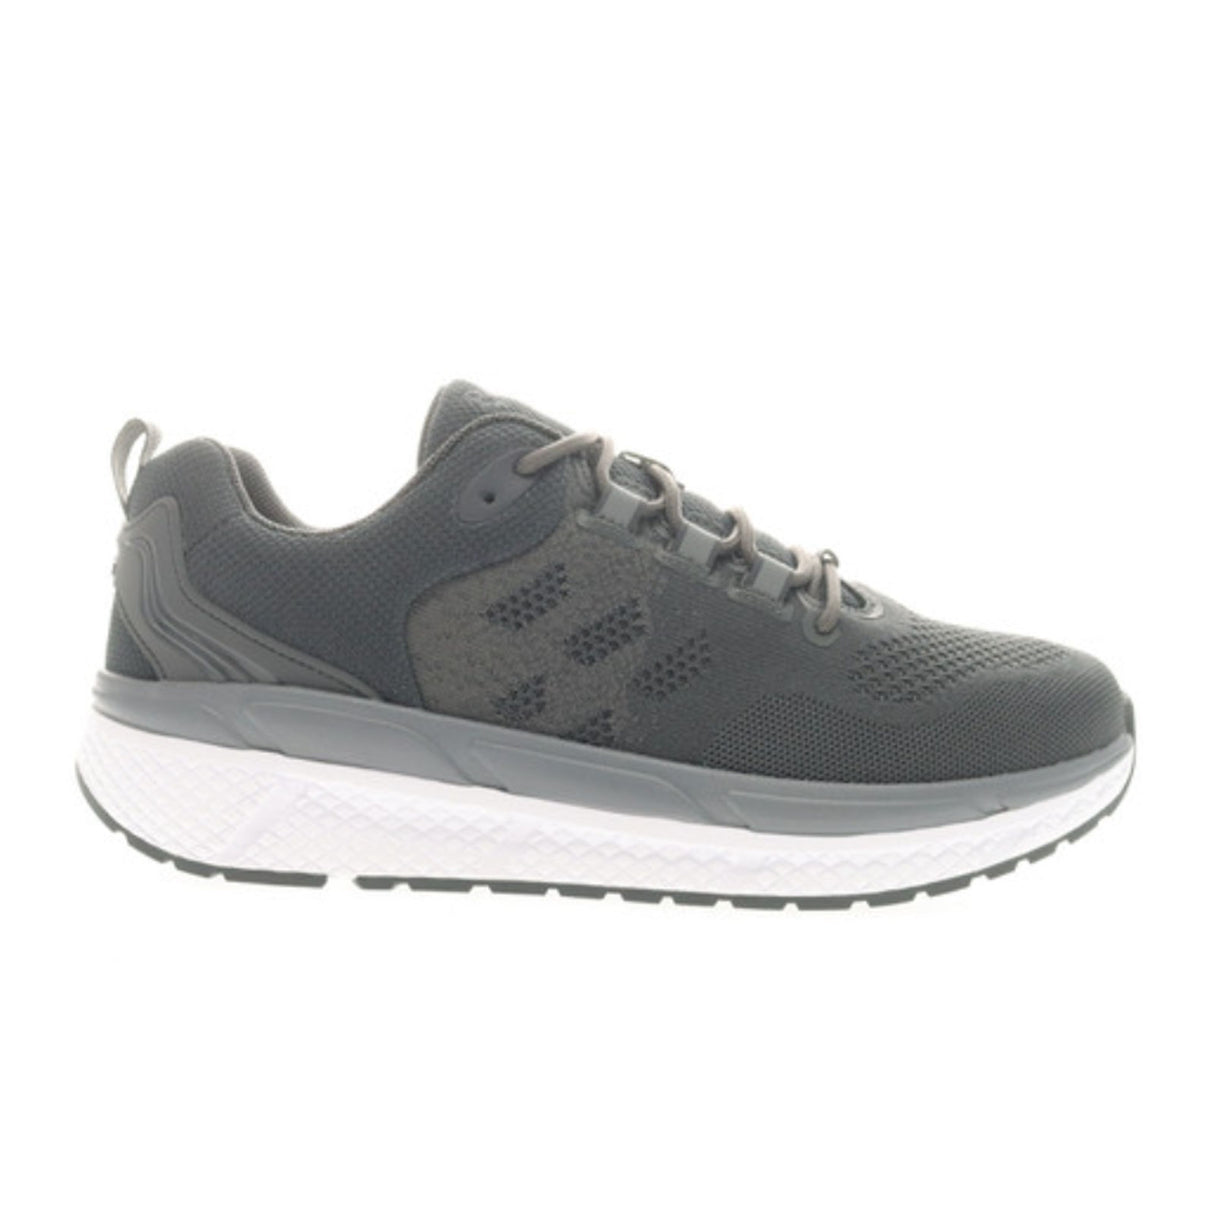 Propet Ultra 267 Running Shoe (Men) - Gunsmoke/Grey Athletic - Running - The Heel Shoe Fitters